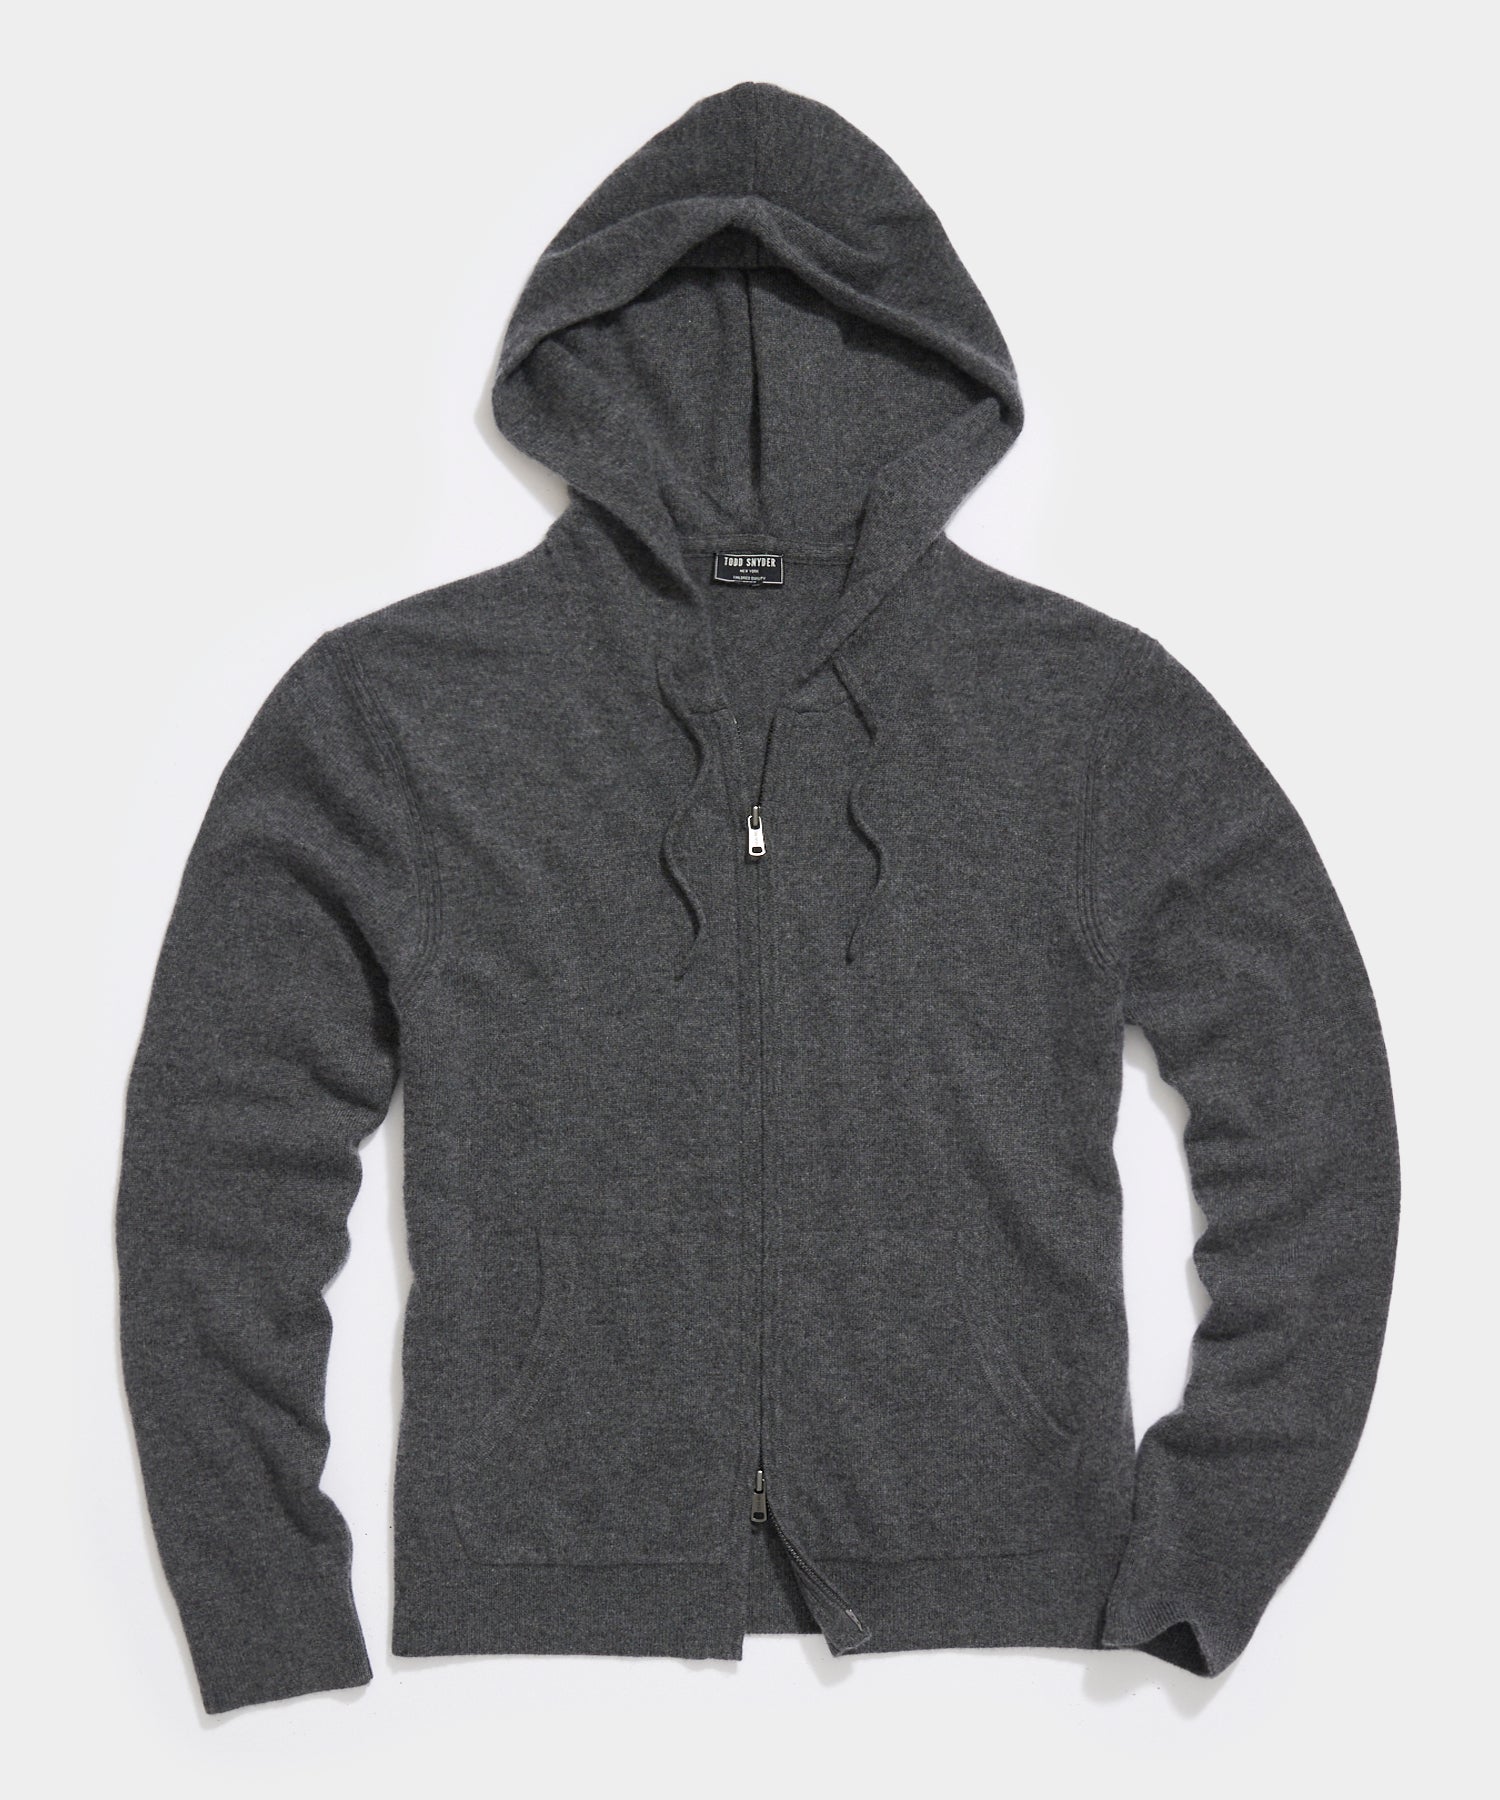 Monogram Motif Cashmere Cotton Blend Zip Hoodie in Storm Grey